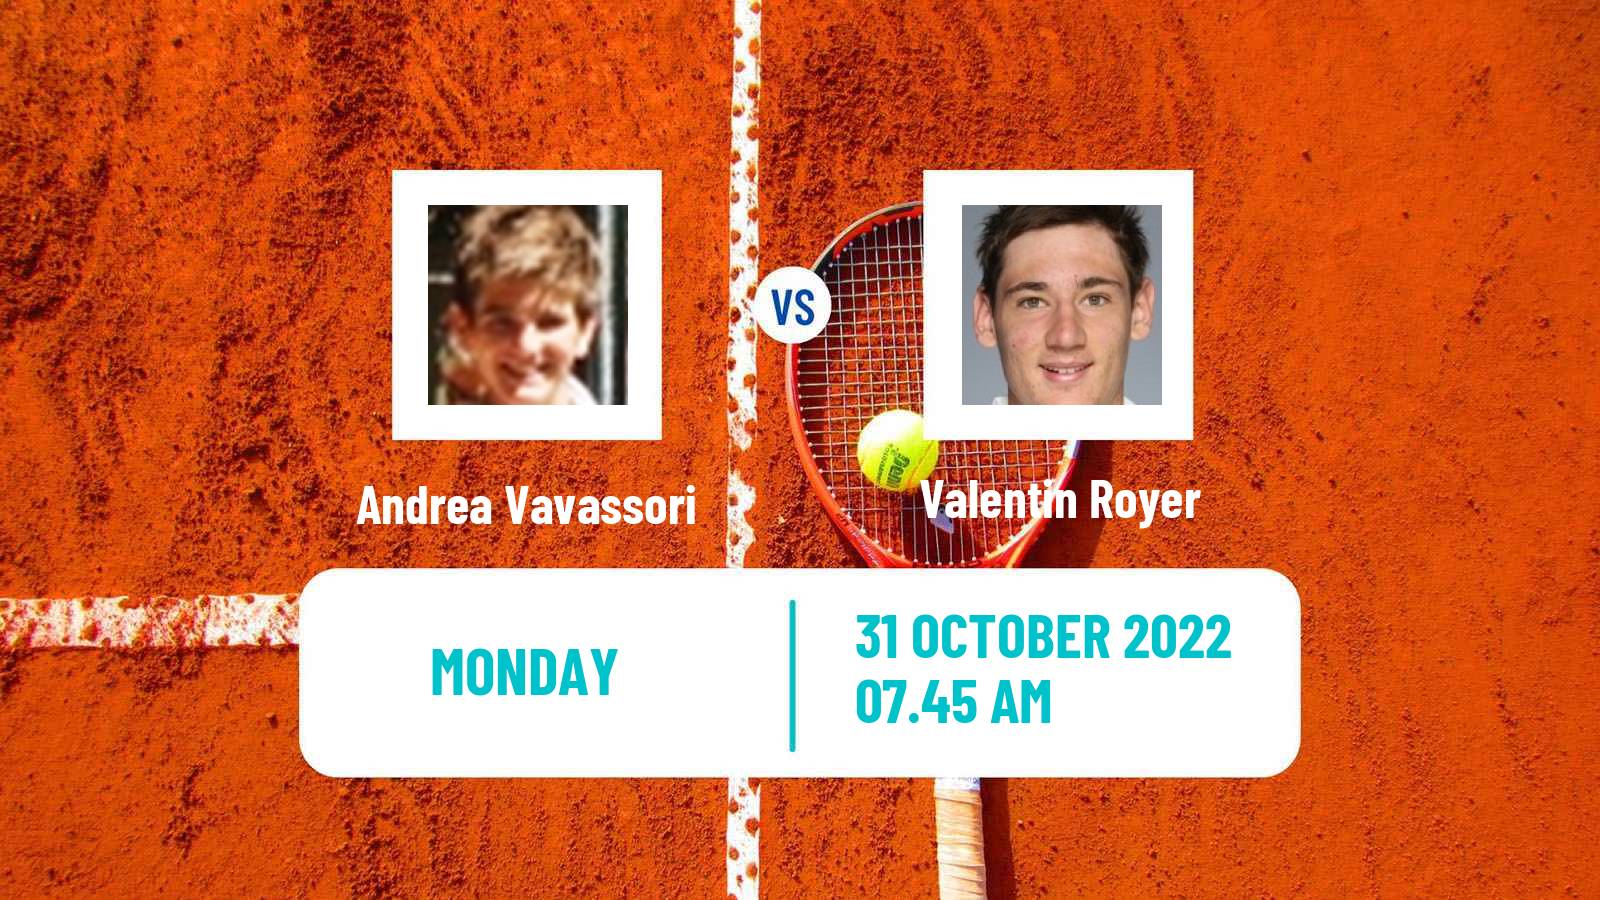 Tennis ATP Challenger Andrea Vavassori - Valentin Royer